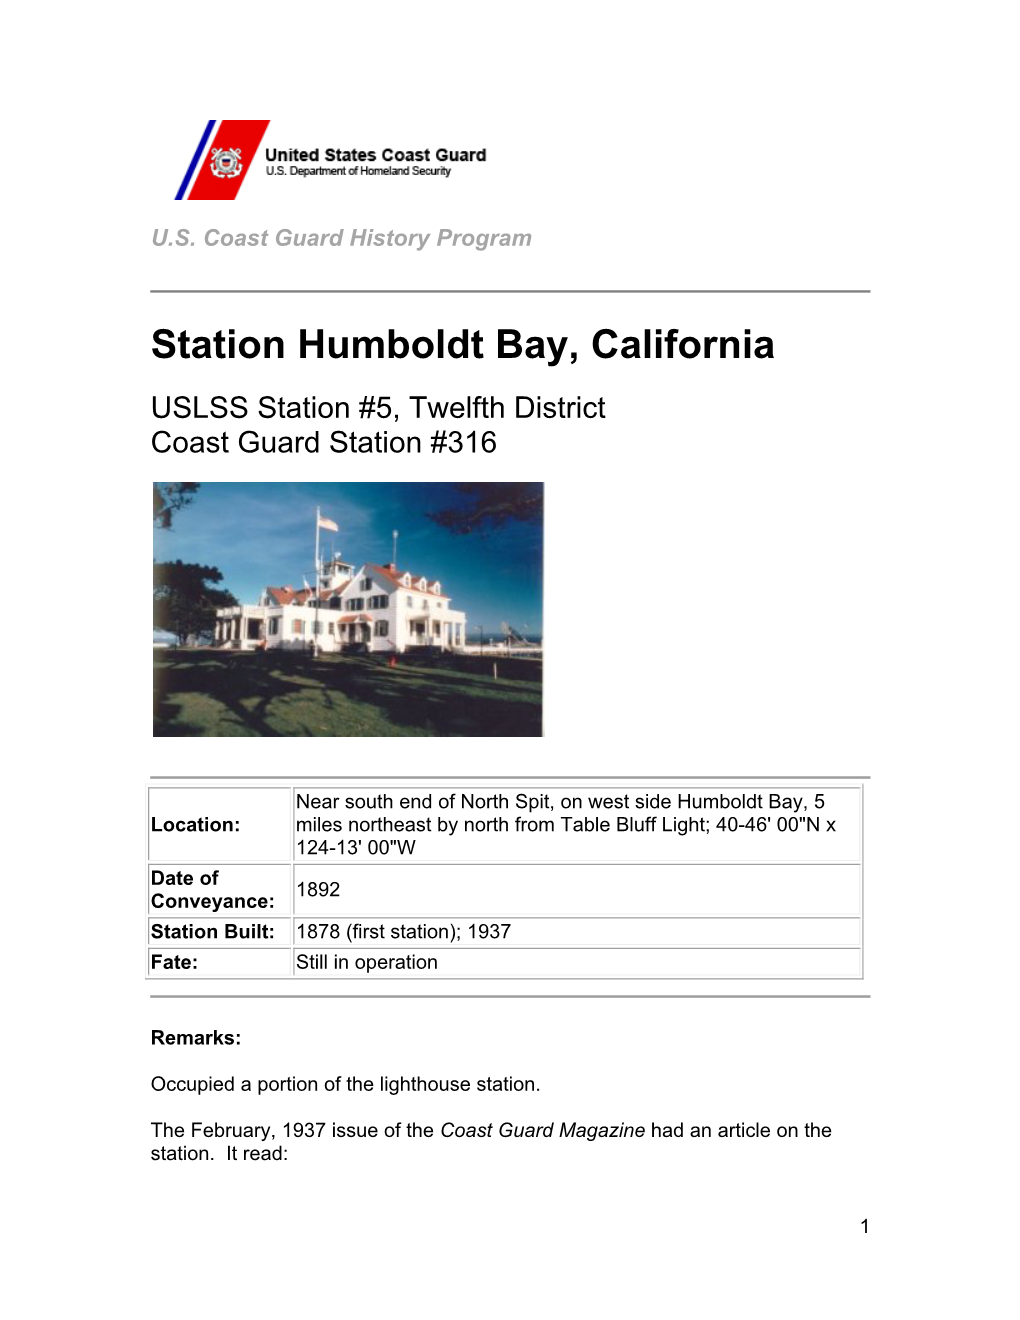 Station Humboldt Bay, California USLSS Station #5, Twelfth District Coast Guard Station #316